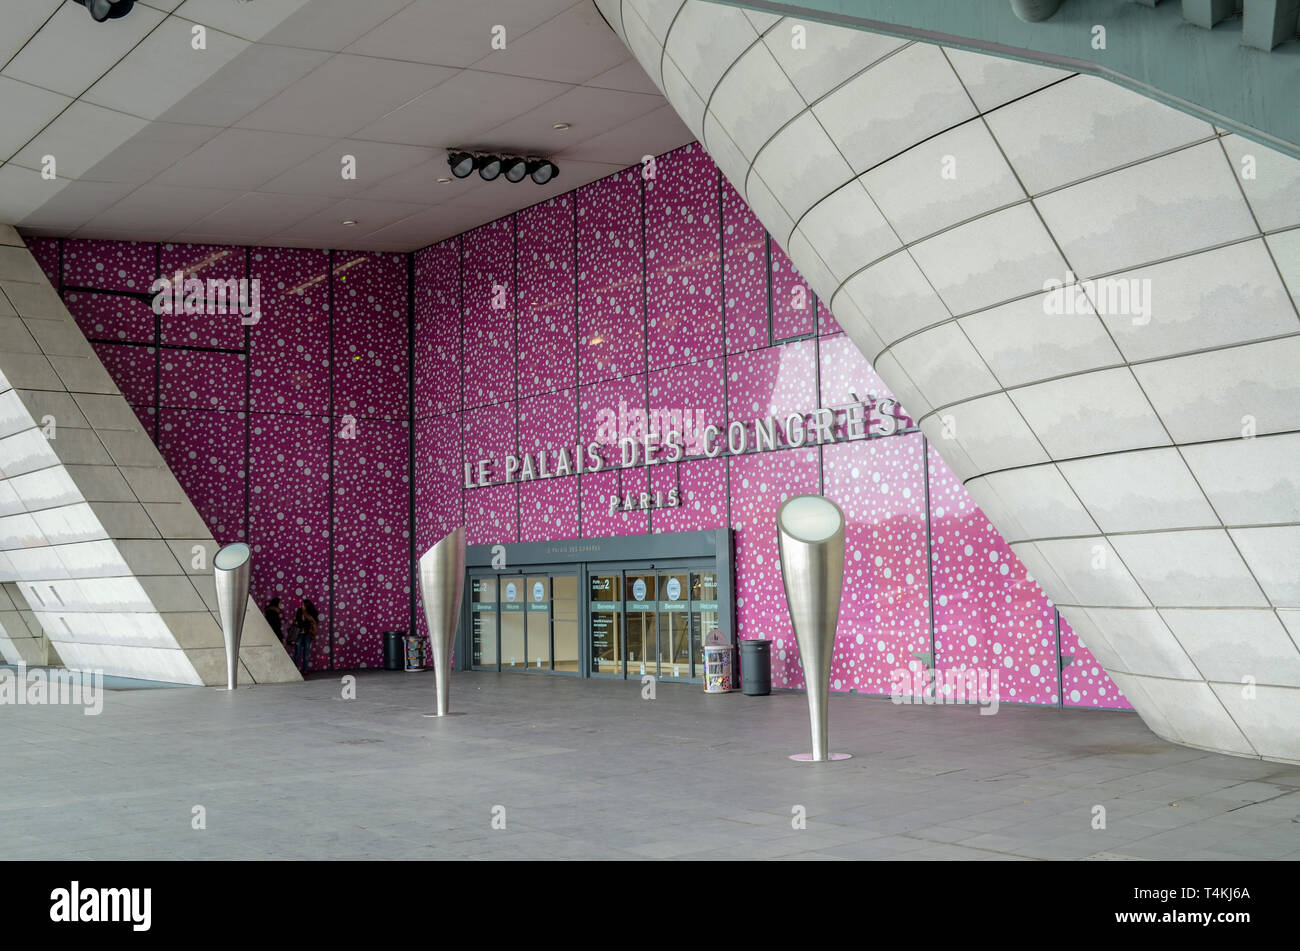 Palais de congres paris hi-res stock photography and images - Alamy